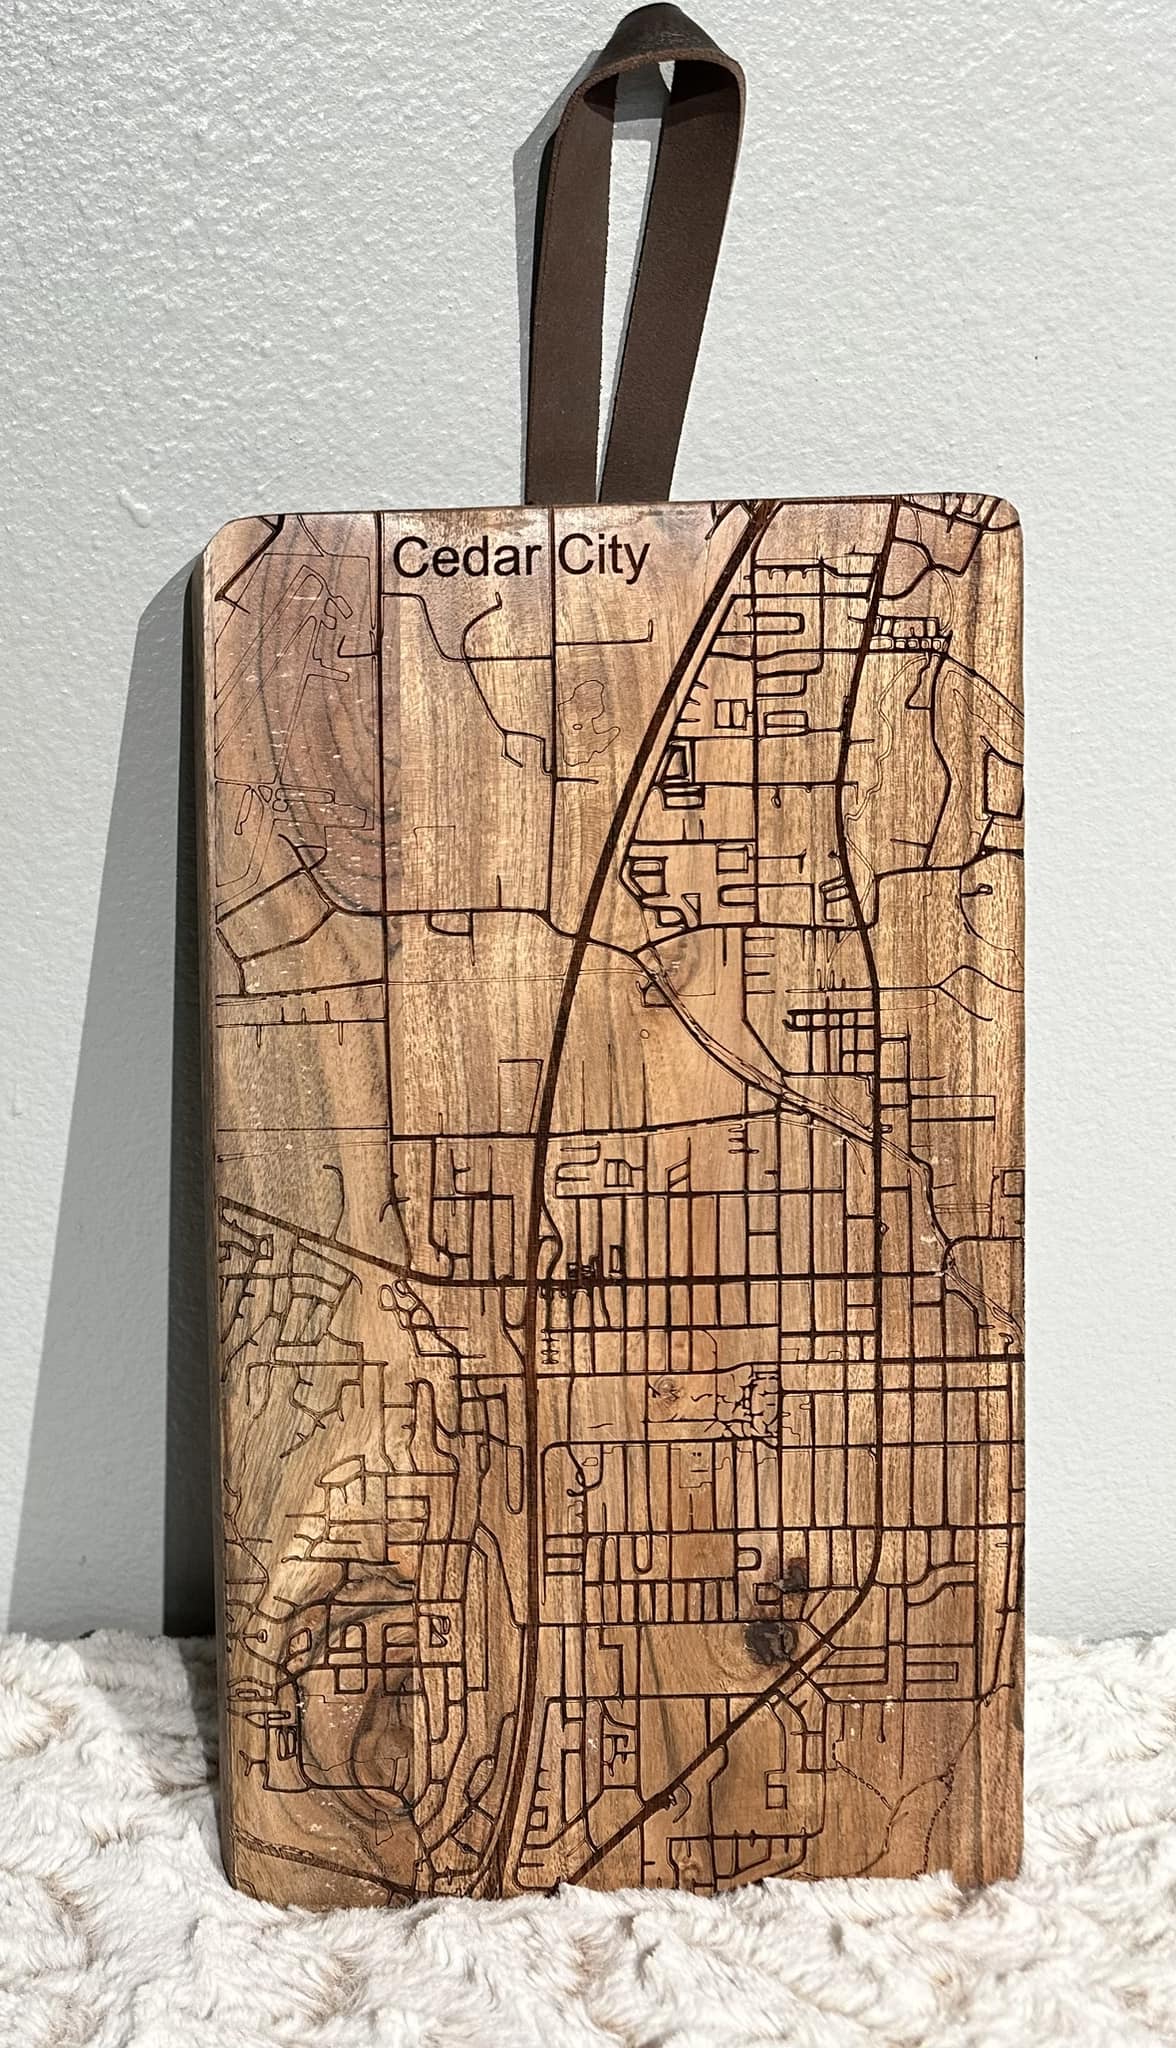 City Map cutting board